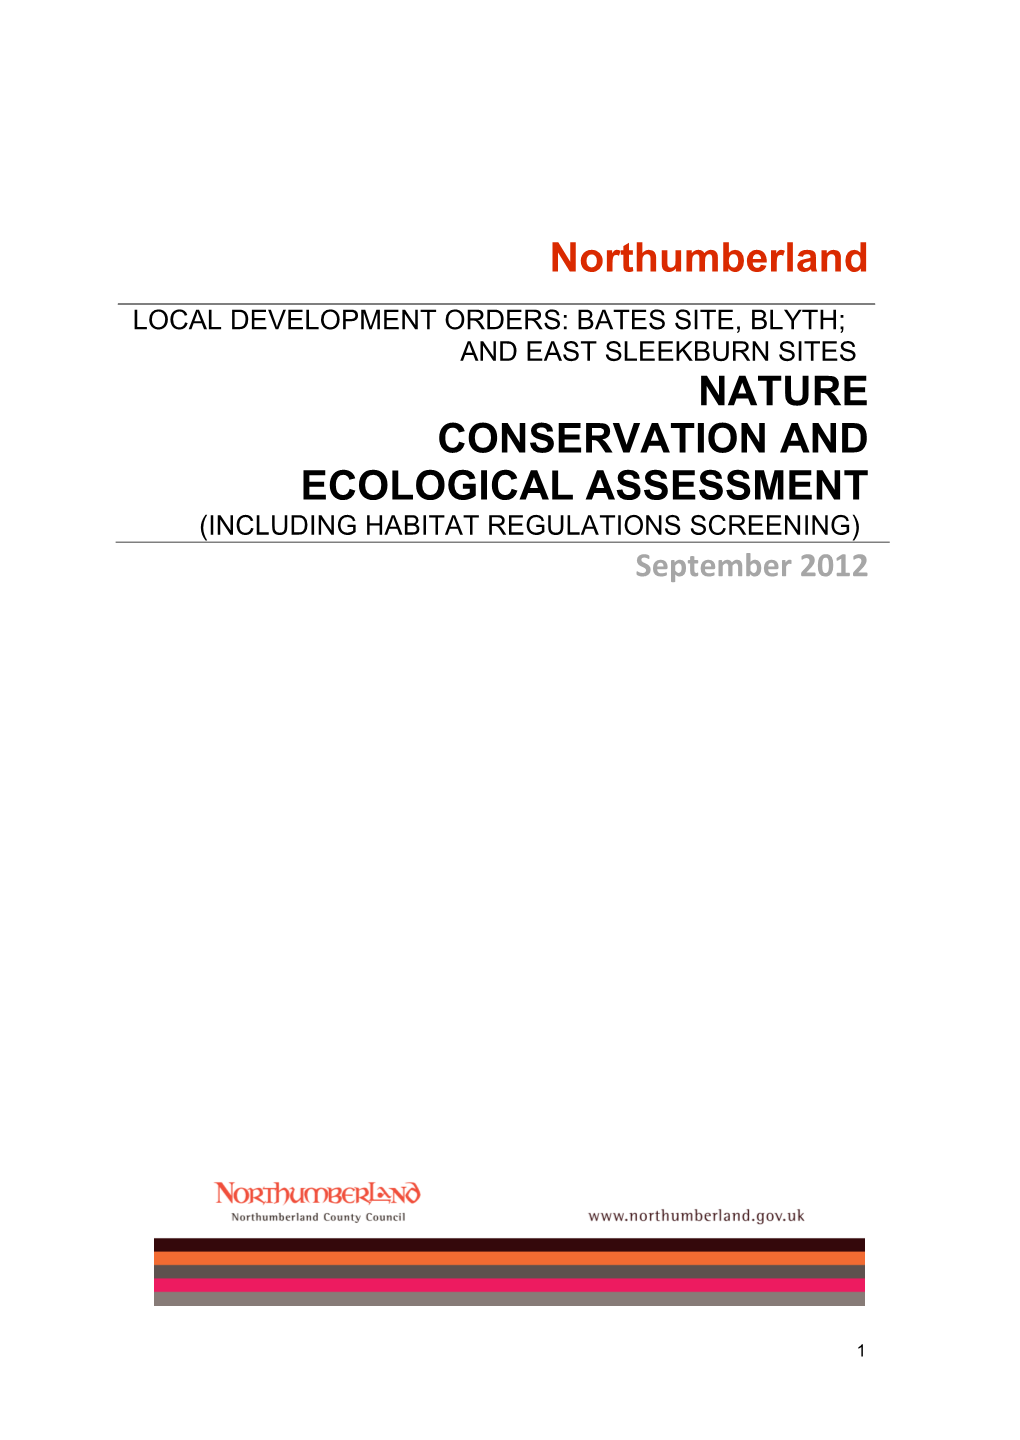 NATURE CONSERVATION and ECOLOGICAL ASSESSMENT (INCLUDING HABITAT REGULATIONS SCREENING) September 2012